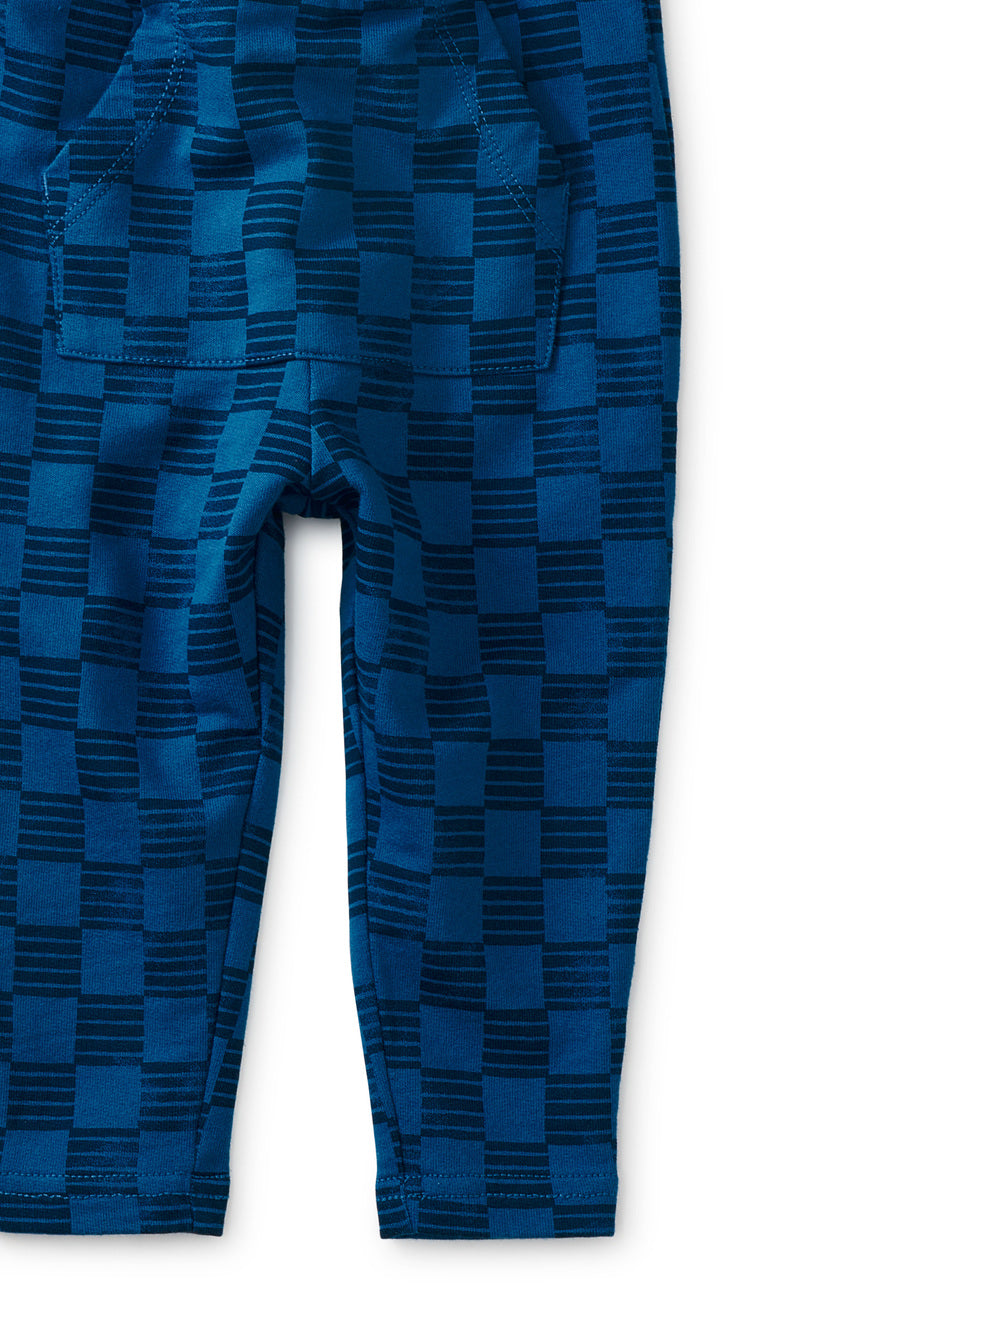 Pocket O' Sun Baby Pants: Striped Checkerboard